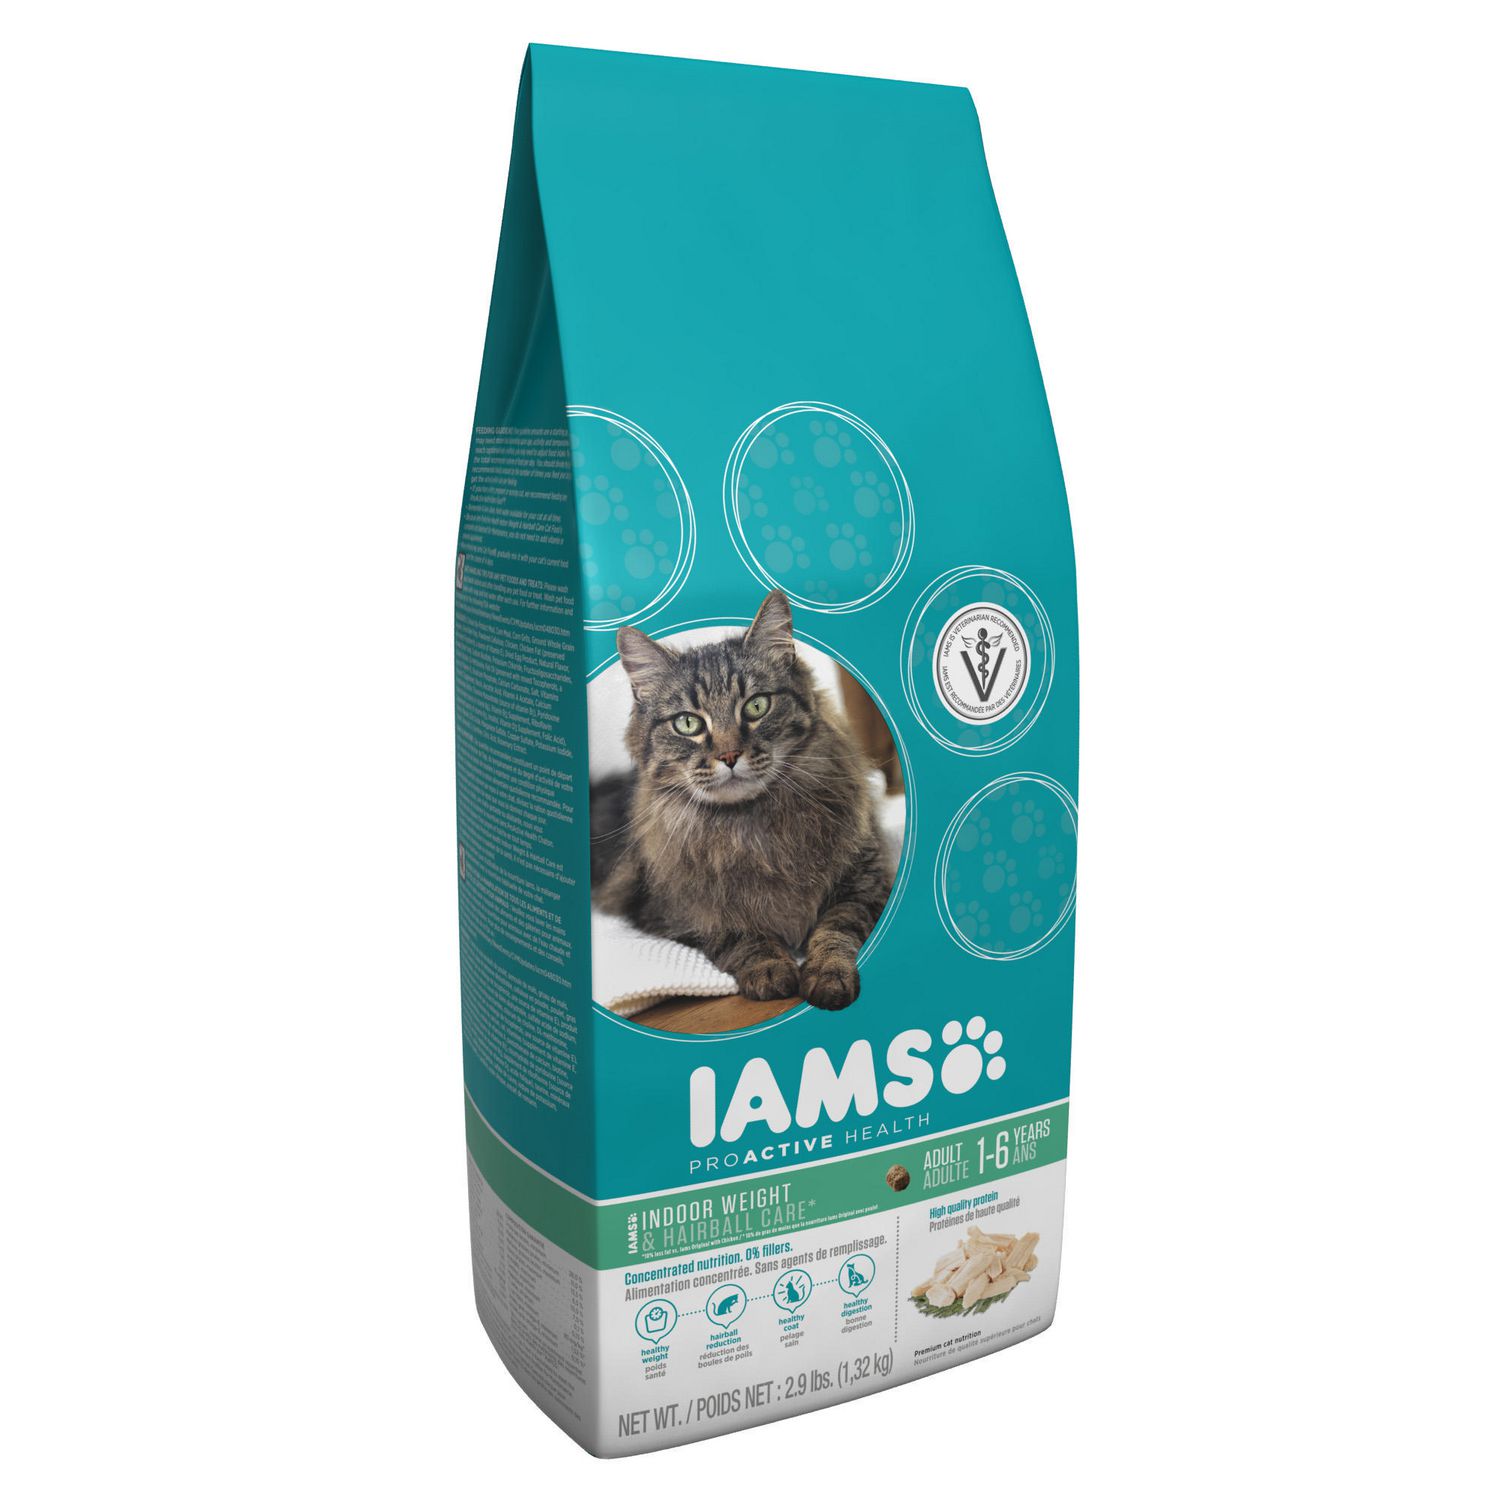 Iams ProActive Health Adult 1+ years Indoor Weight & Hairball Care Cat